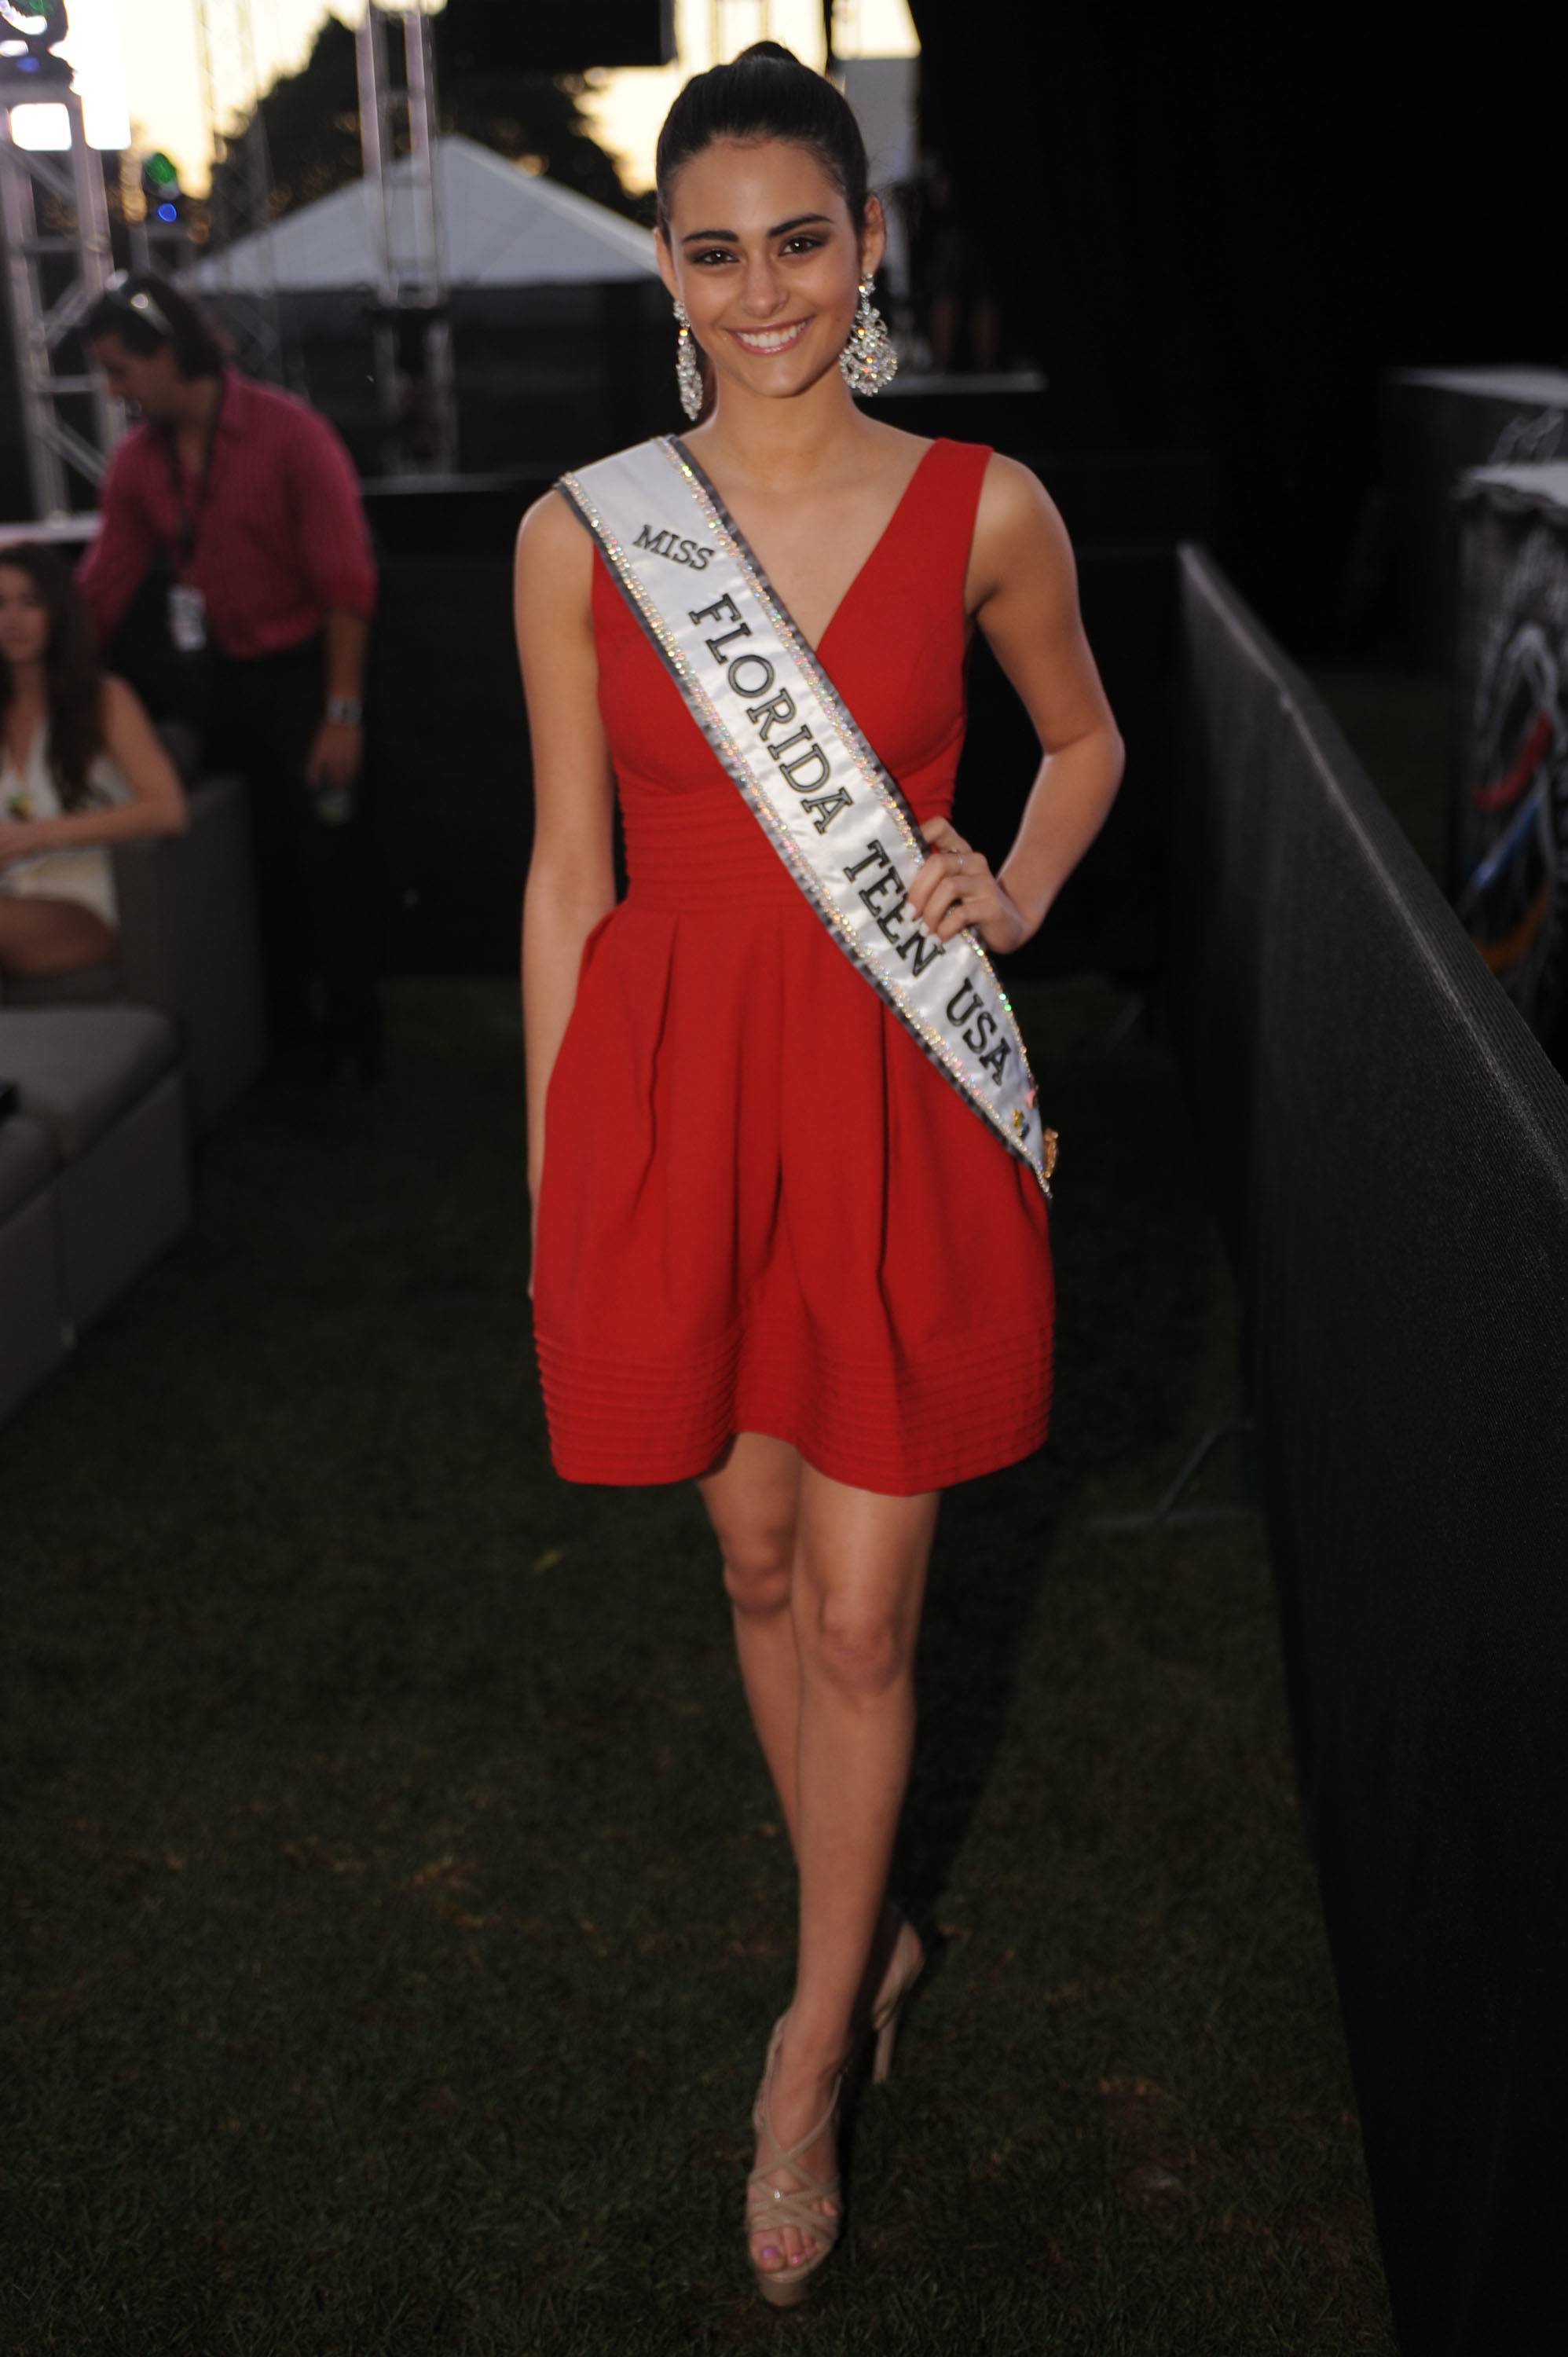 Miss Florida Teen USA Natalie Fiallo